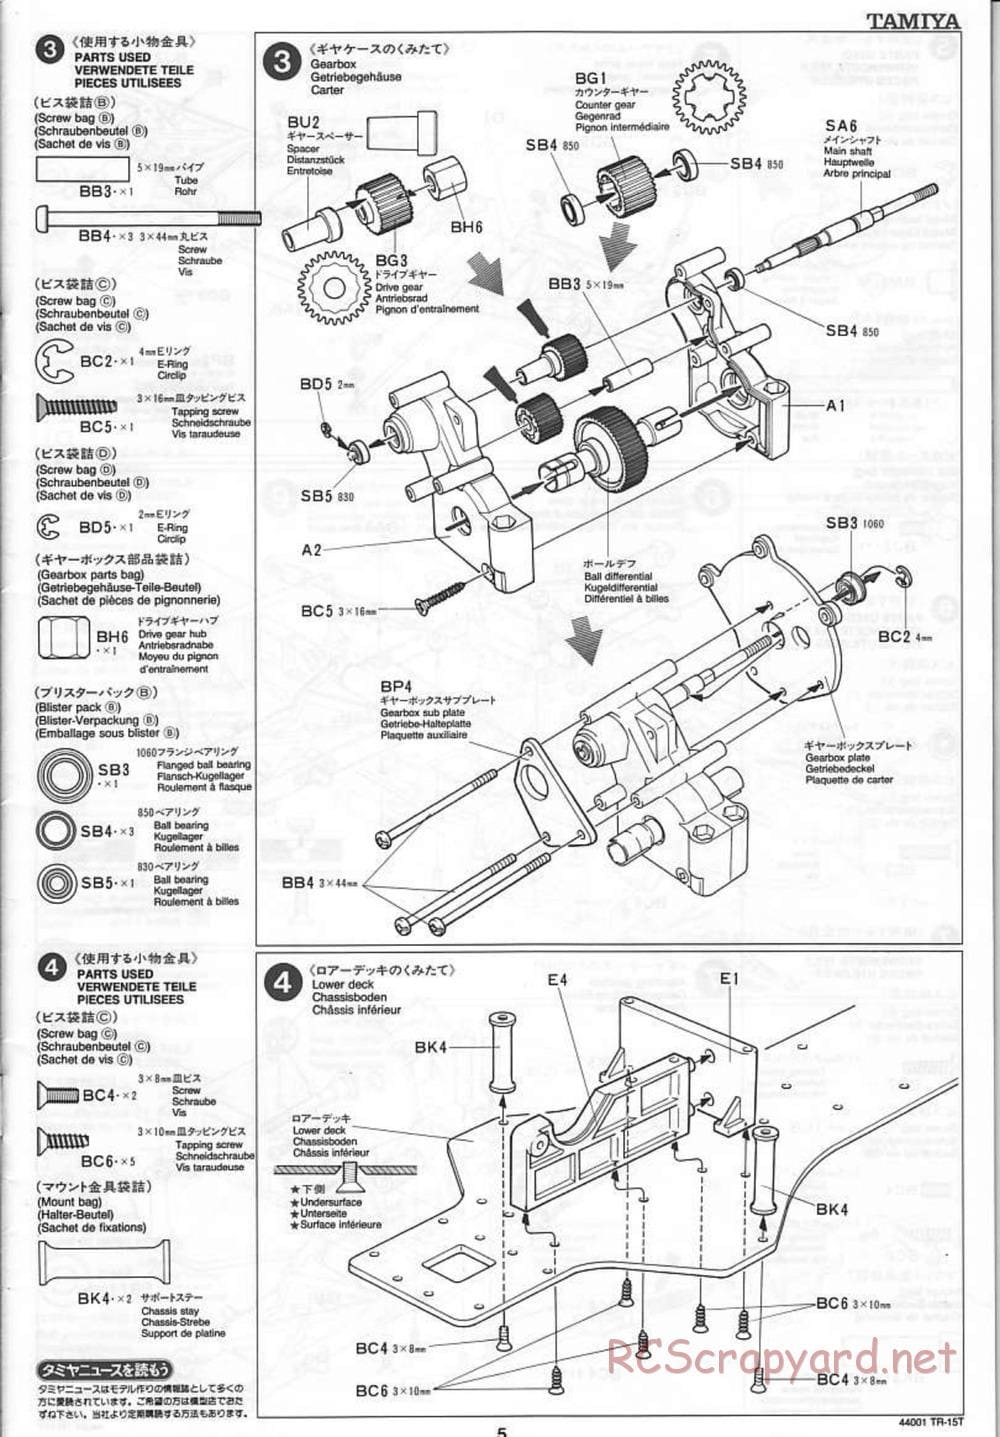 Tamiya - Stadium Racing Truck TR-15T Chassis - Manual - Page 5